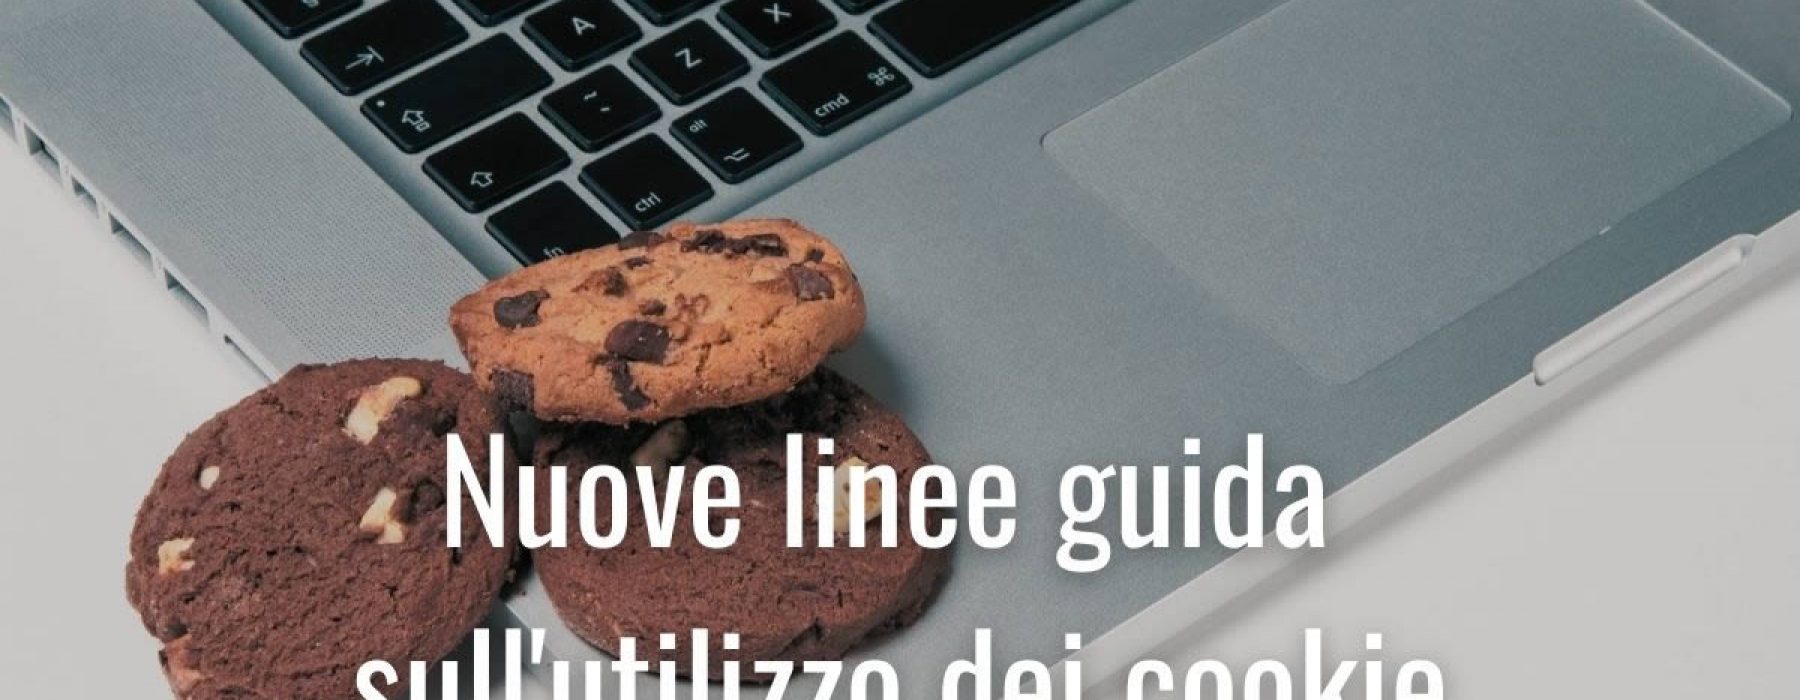 nuove linee guida utilizzo cookie